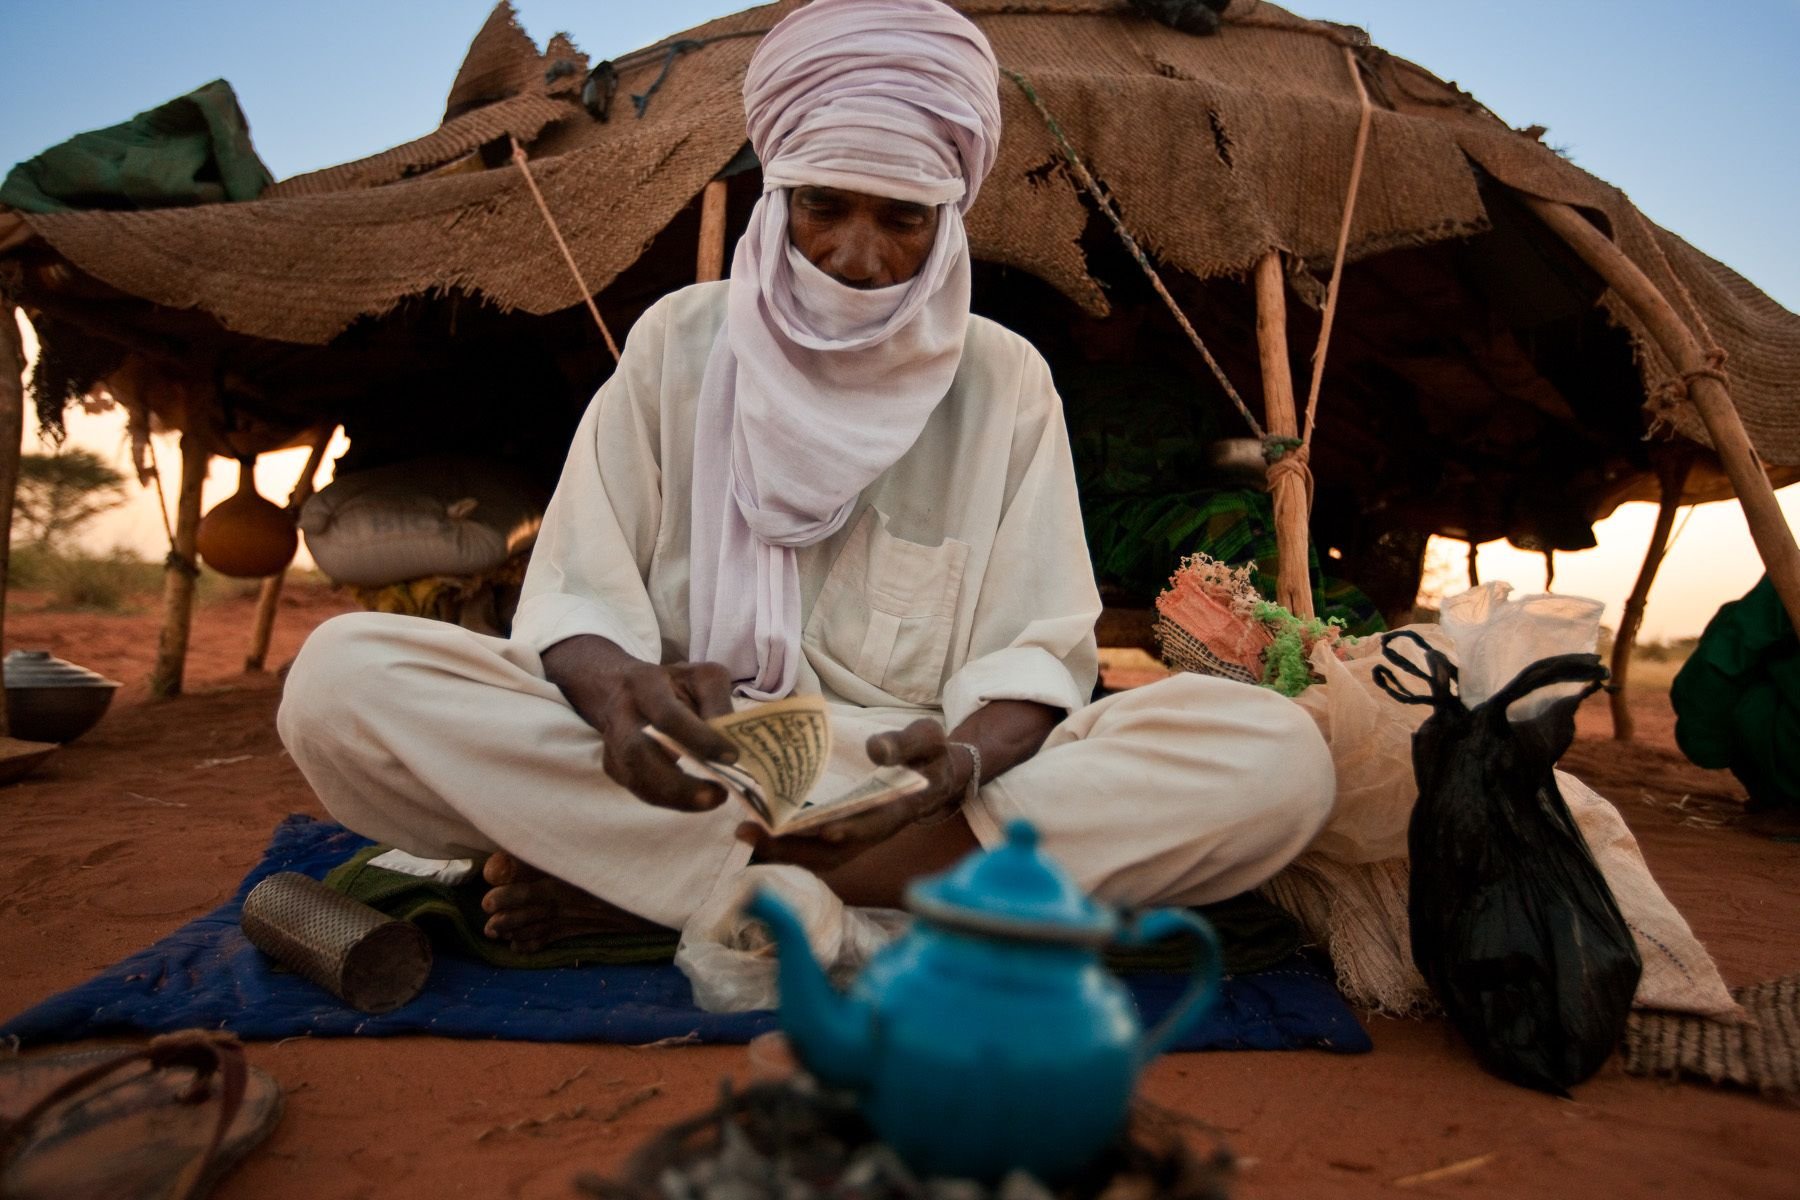 Жизнь и быт в пустыне. Берберы туареги бедуины. Туареги народ. Туареги Марокко бедуины. Туареги племя кочевников Африки.